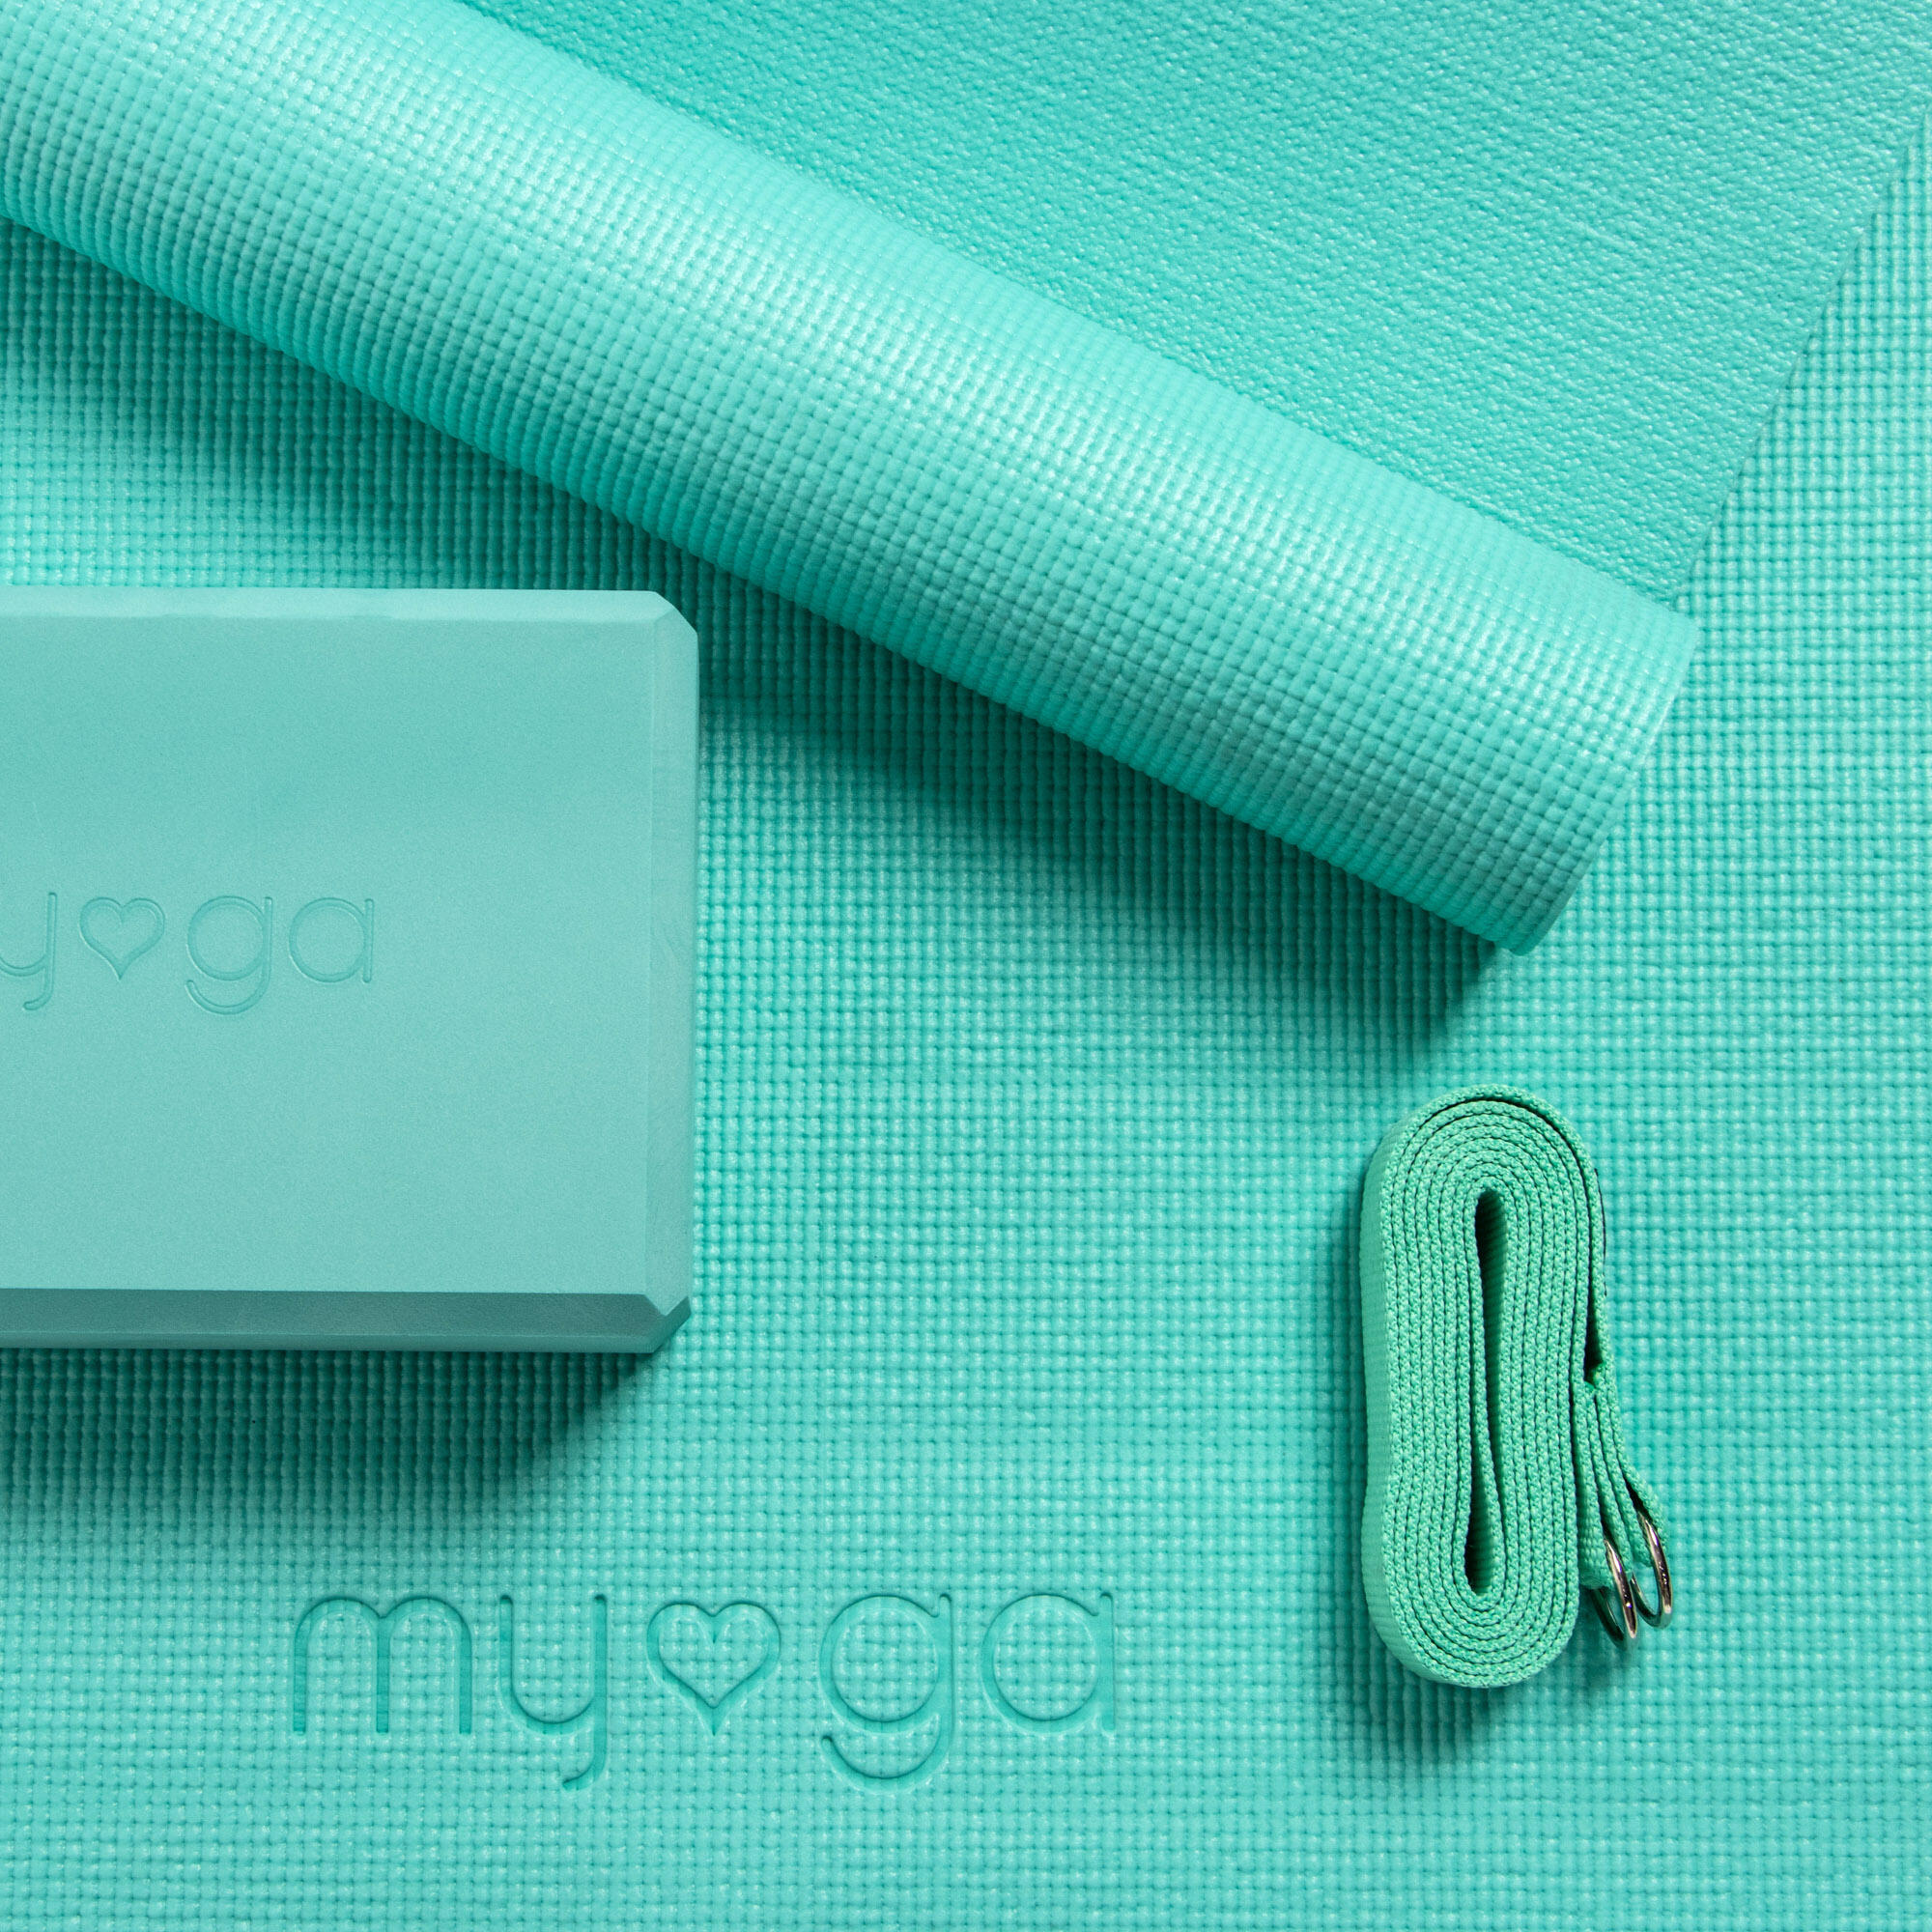 Myga Yoga Starter Kit - Turquoise 3/7